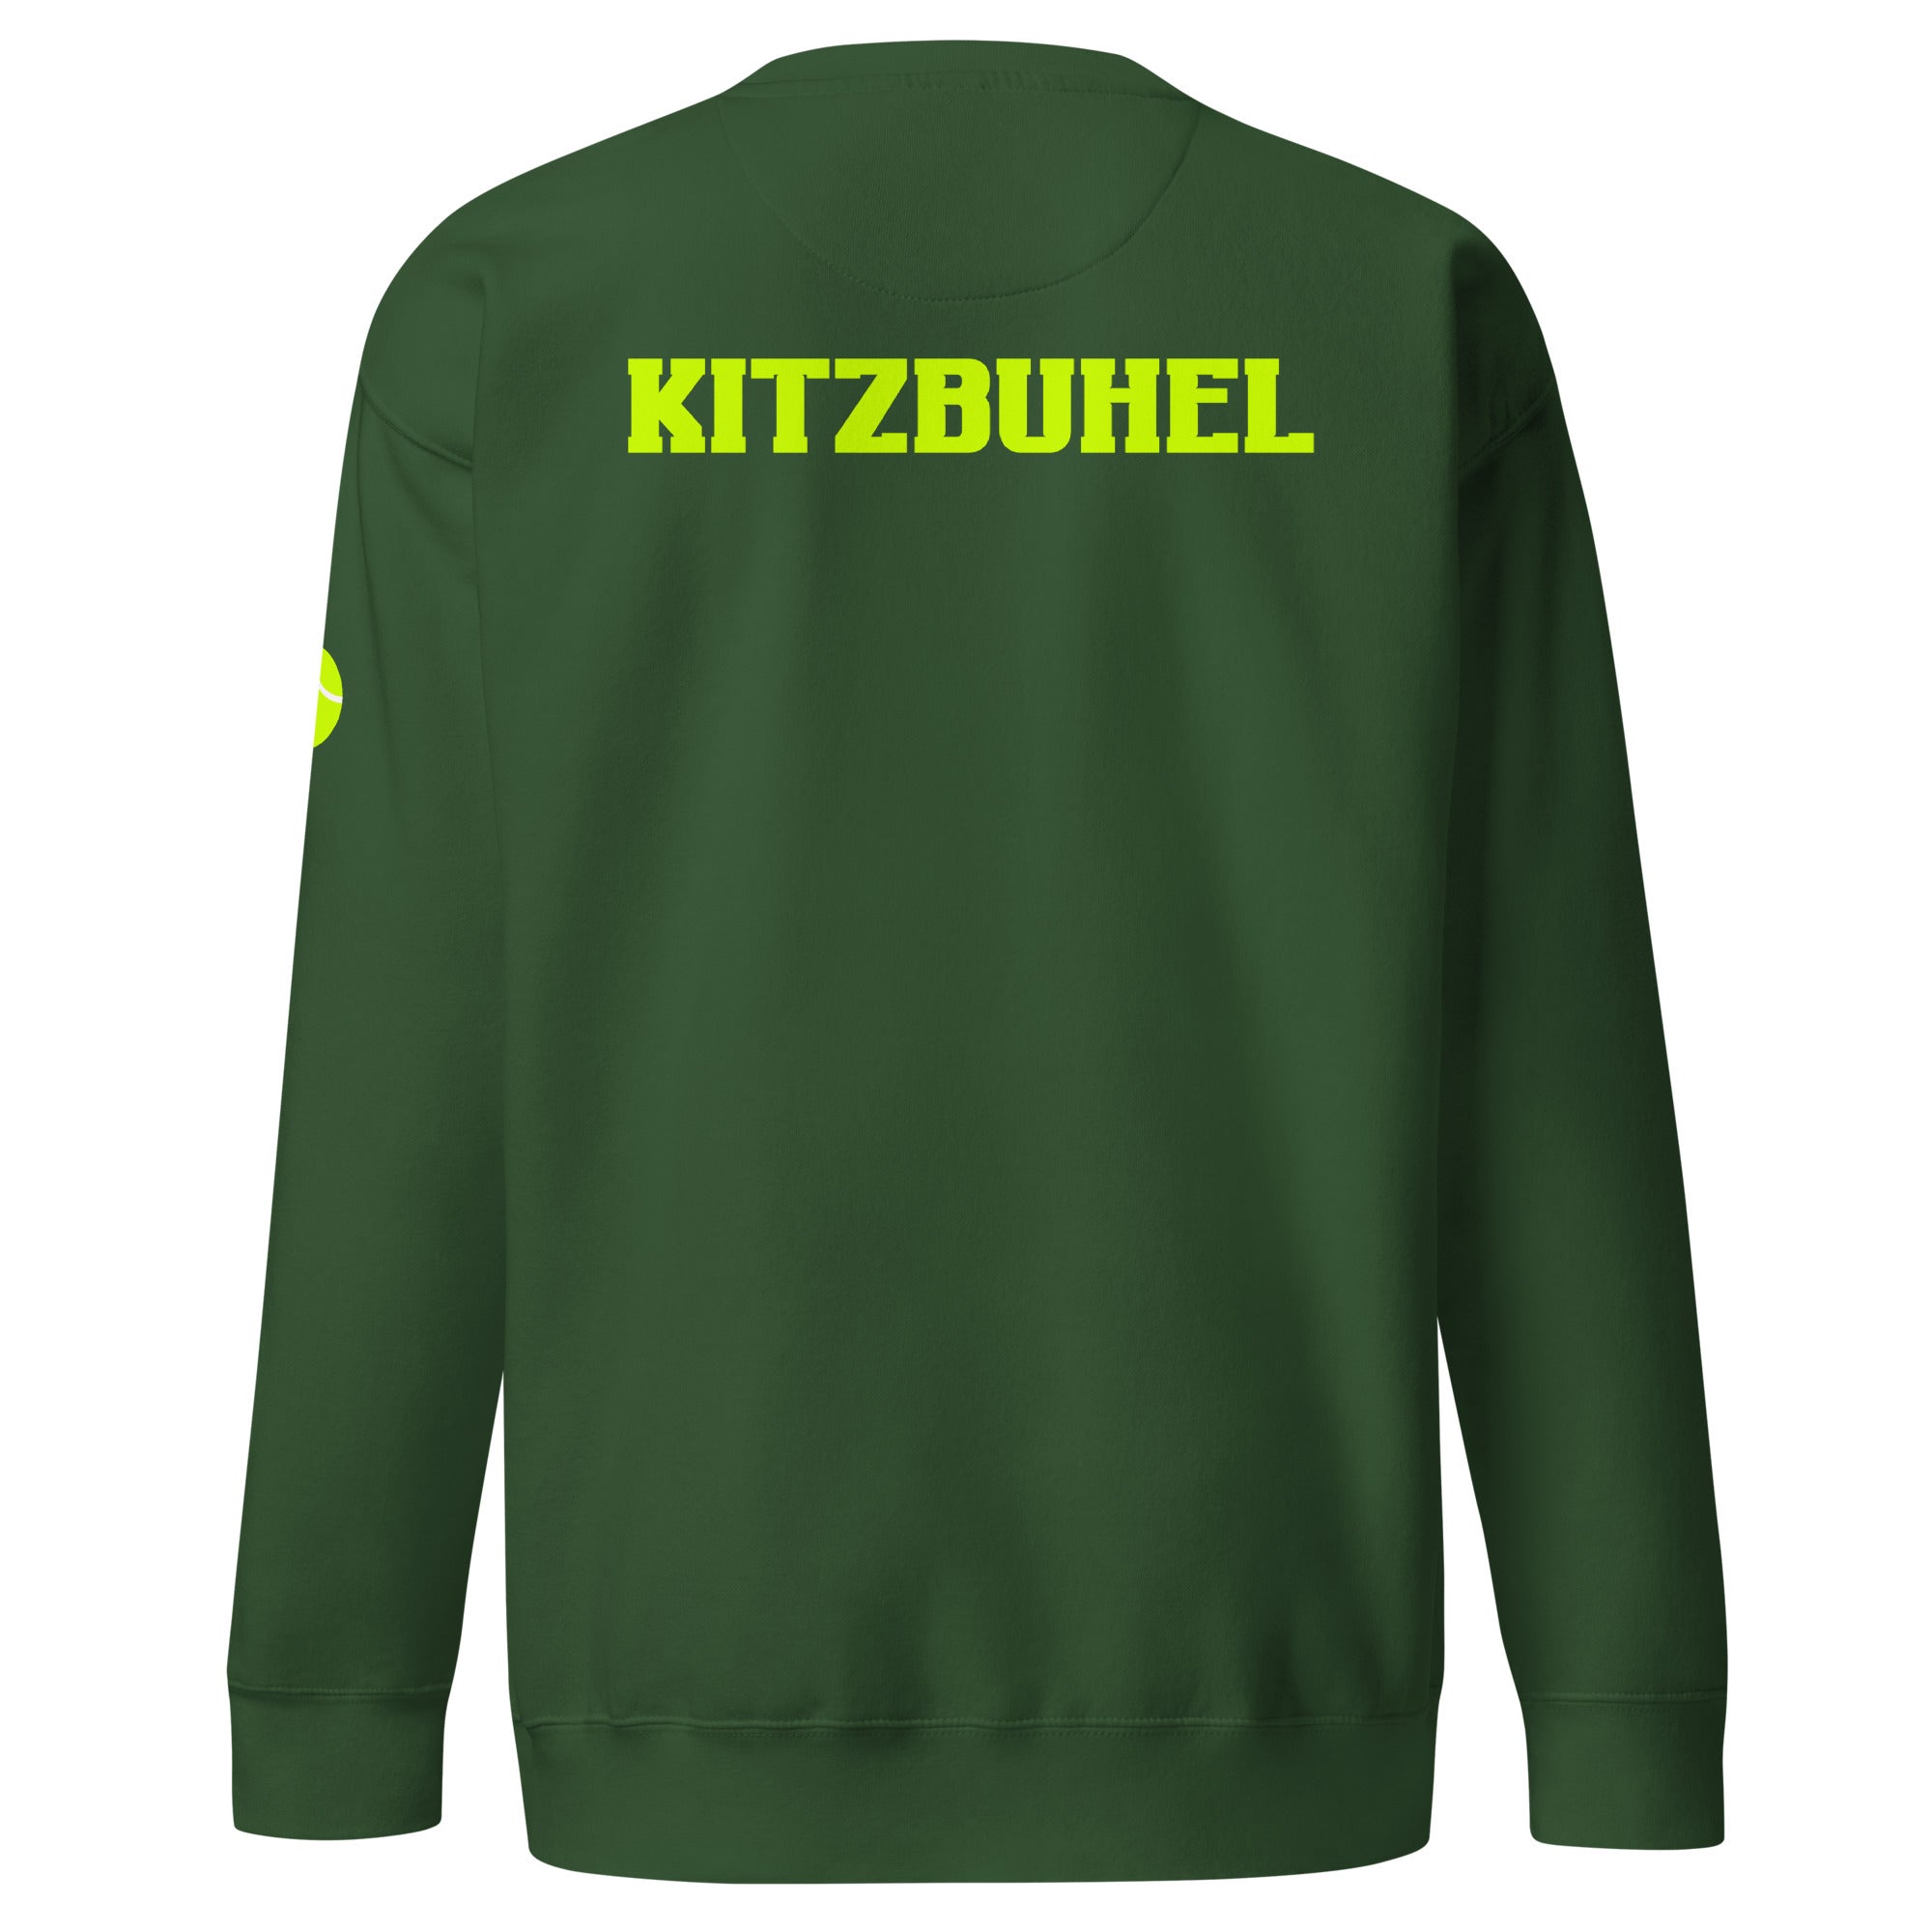 Unisex Premium Sweatshirt - Tennis Masters Kitzbuhel - GRAPHIC T-SHIRTS